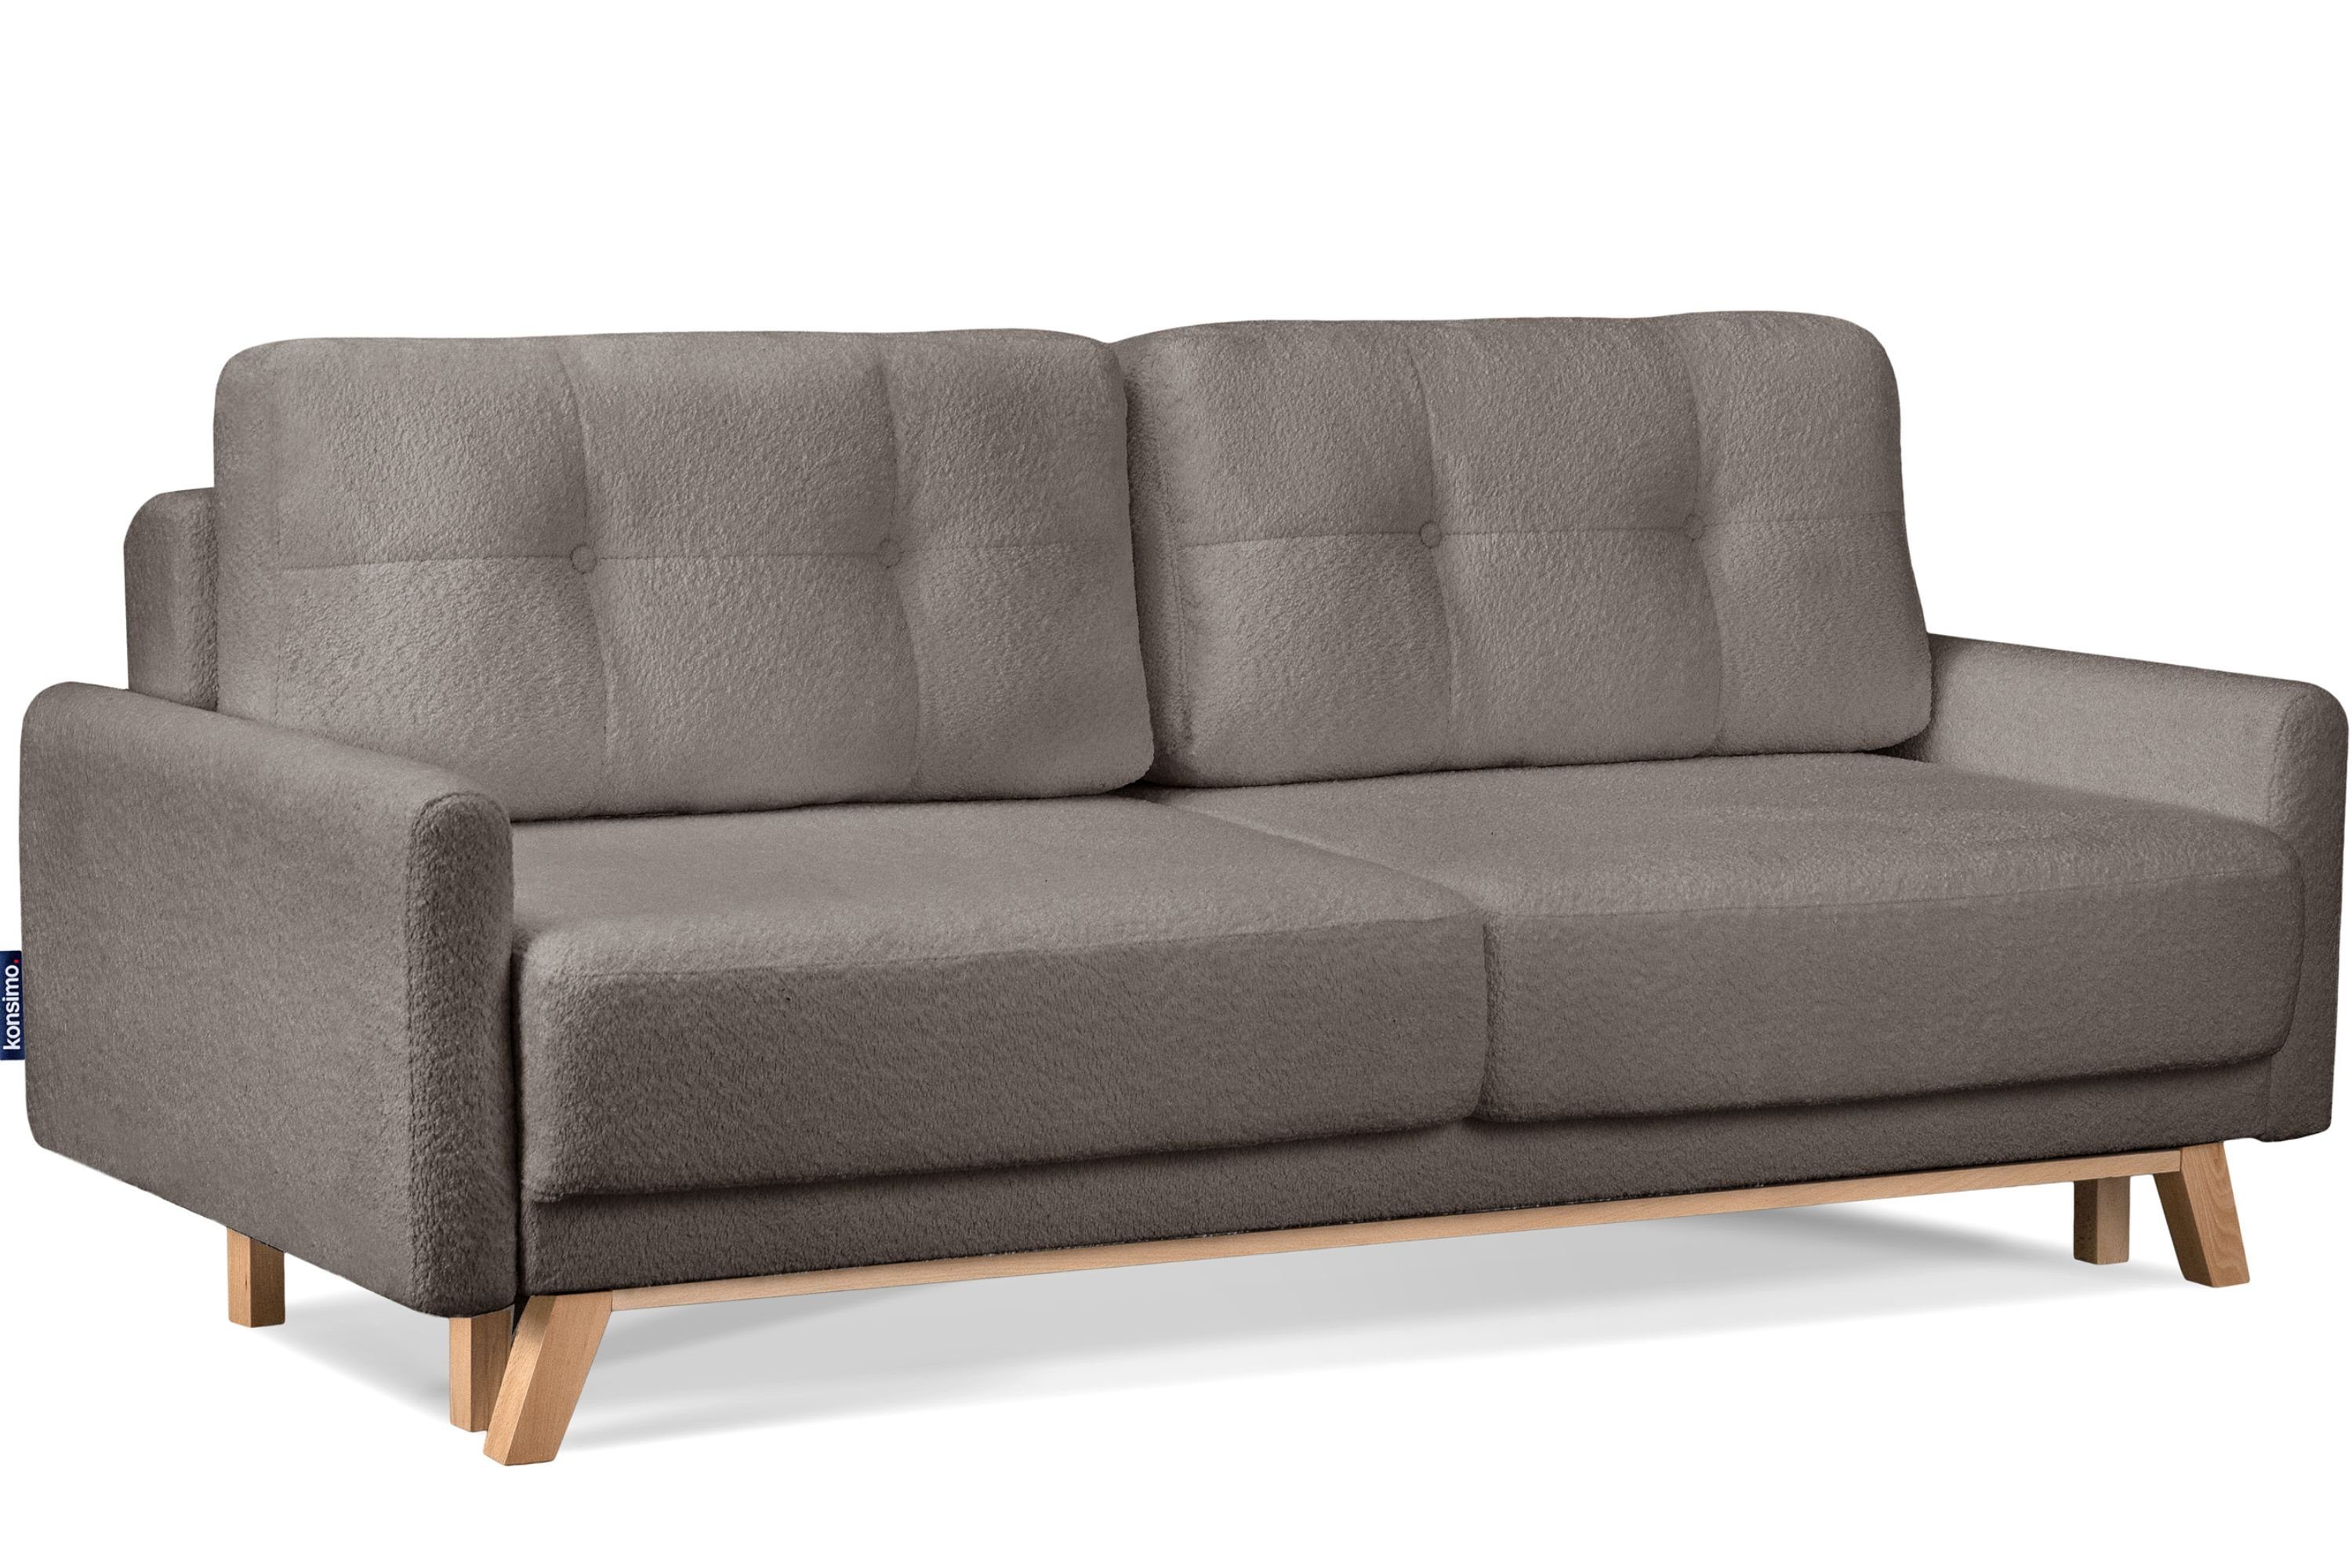 braun Liegfläche VISNA braun | 193×146 ausziehbare Sofa | braun Personen, Konsimo 3 Schlafsofa